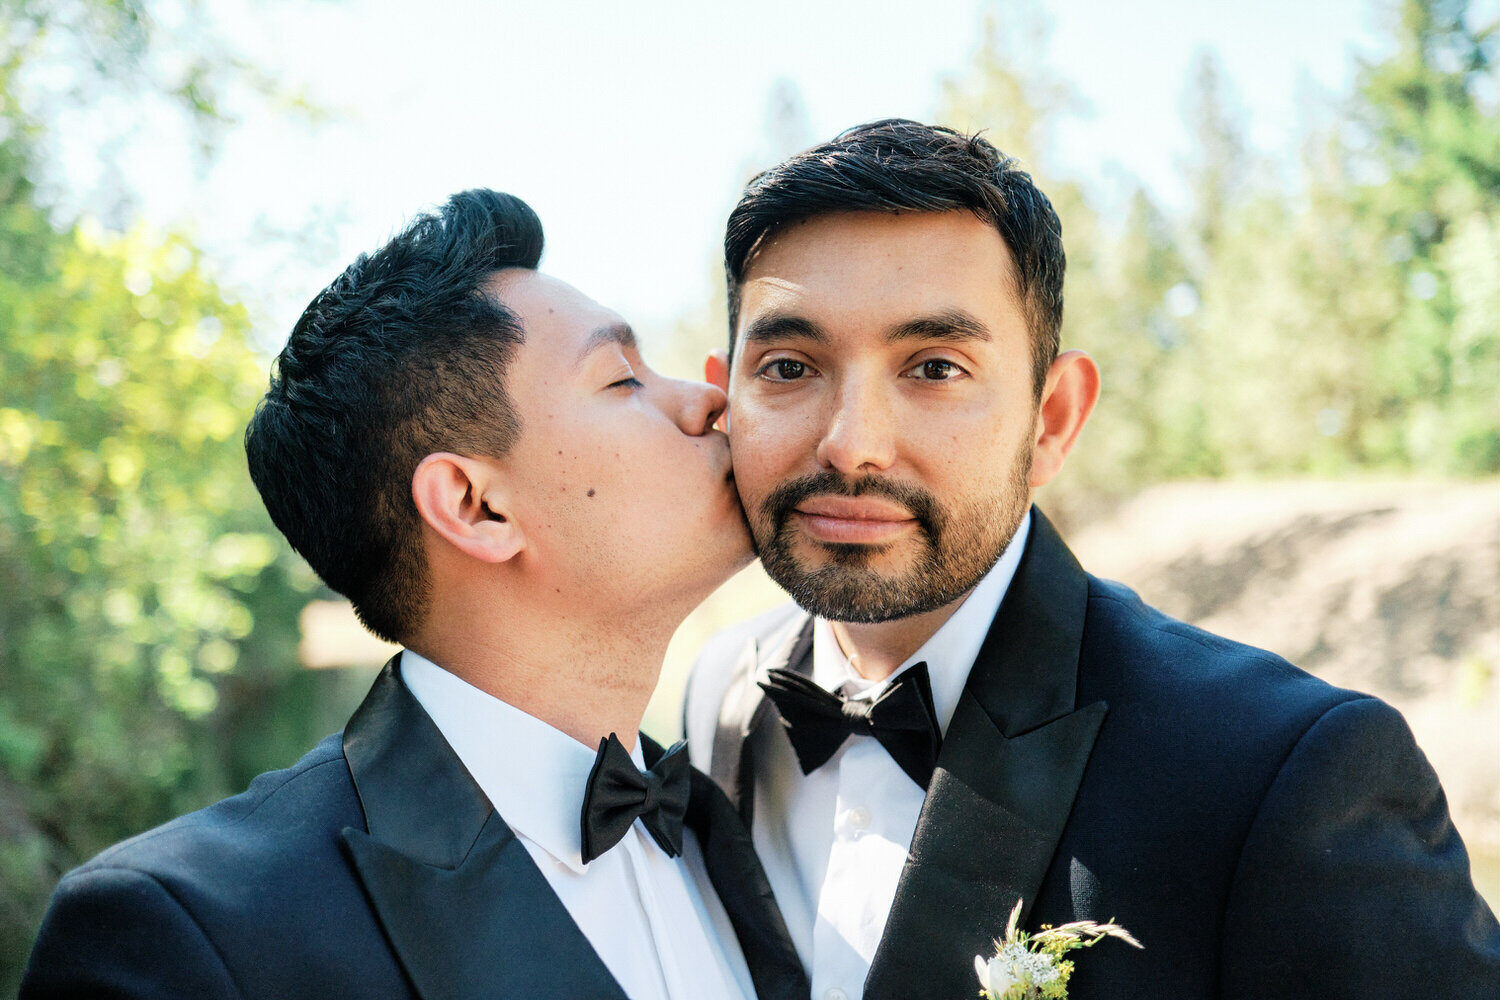 LGBTQ couple kiss on the cheek